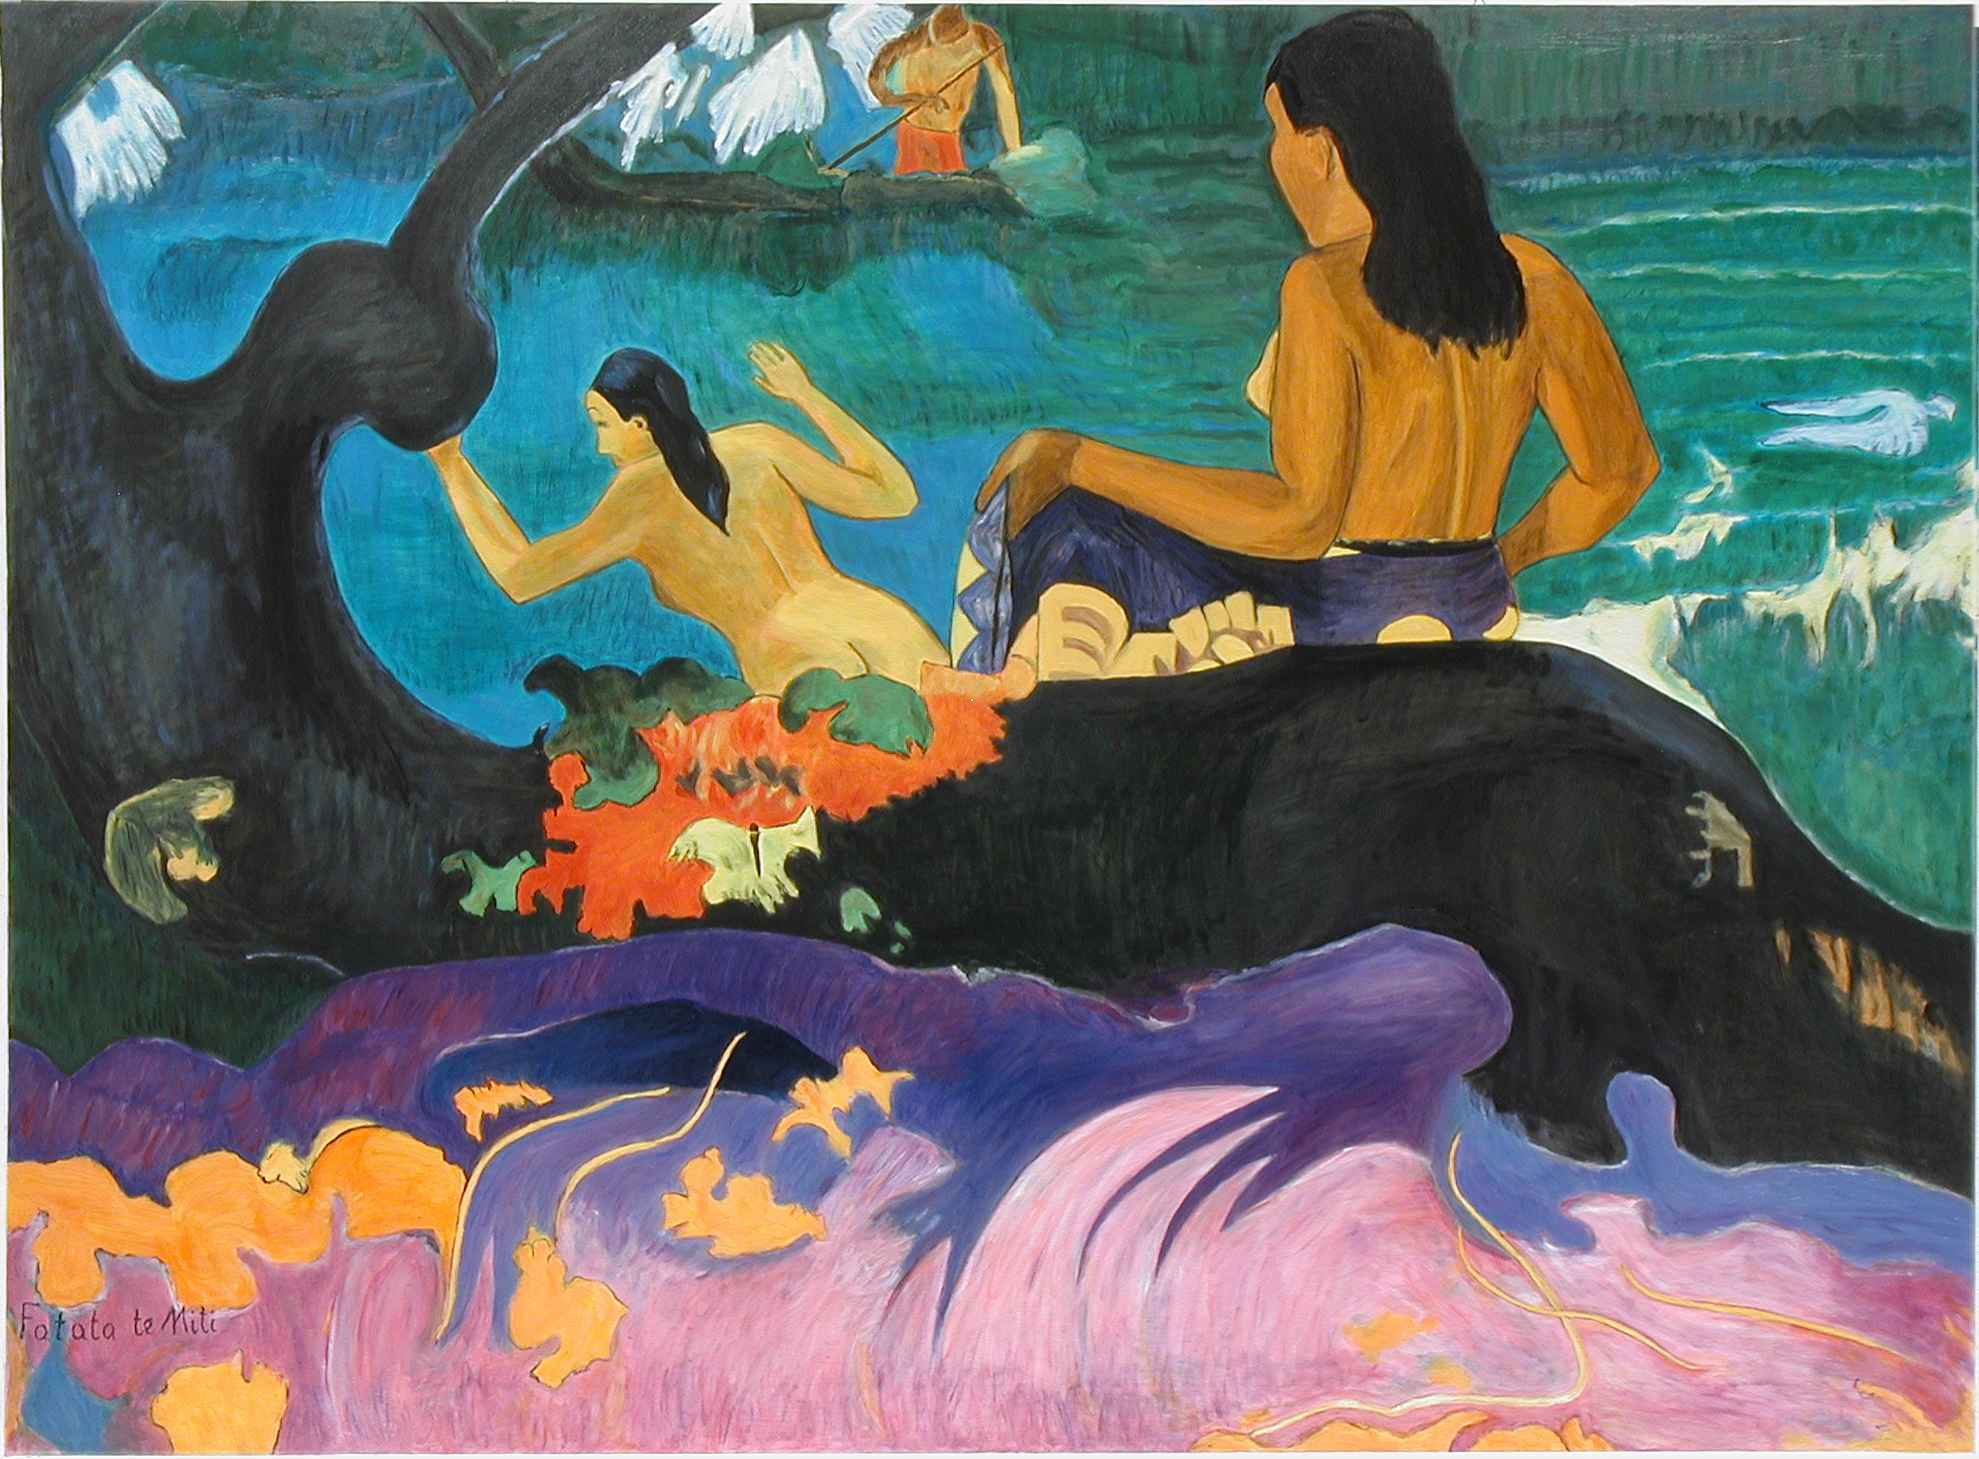 Paul Gauguin, Fatata te